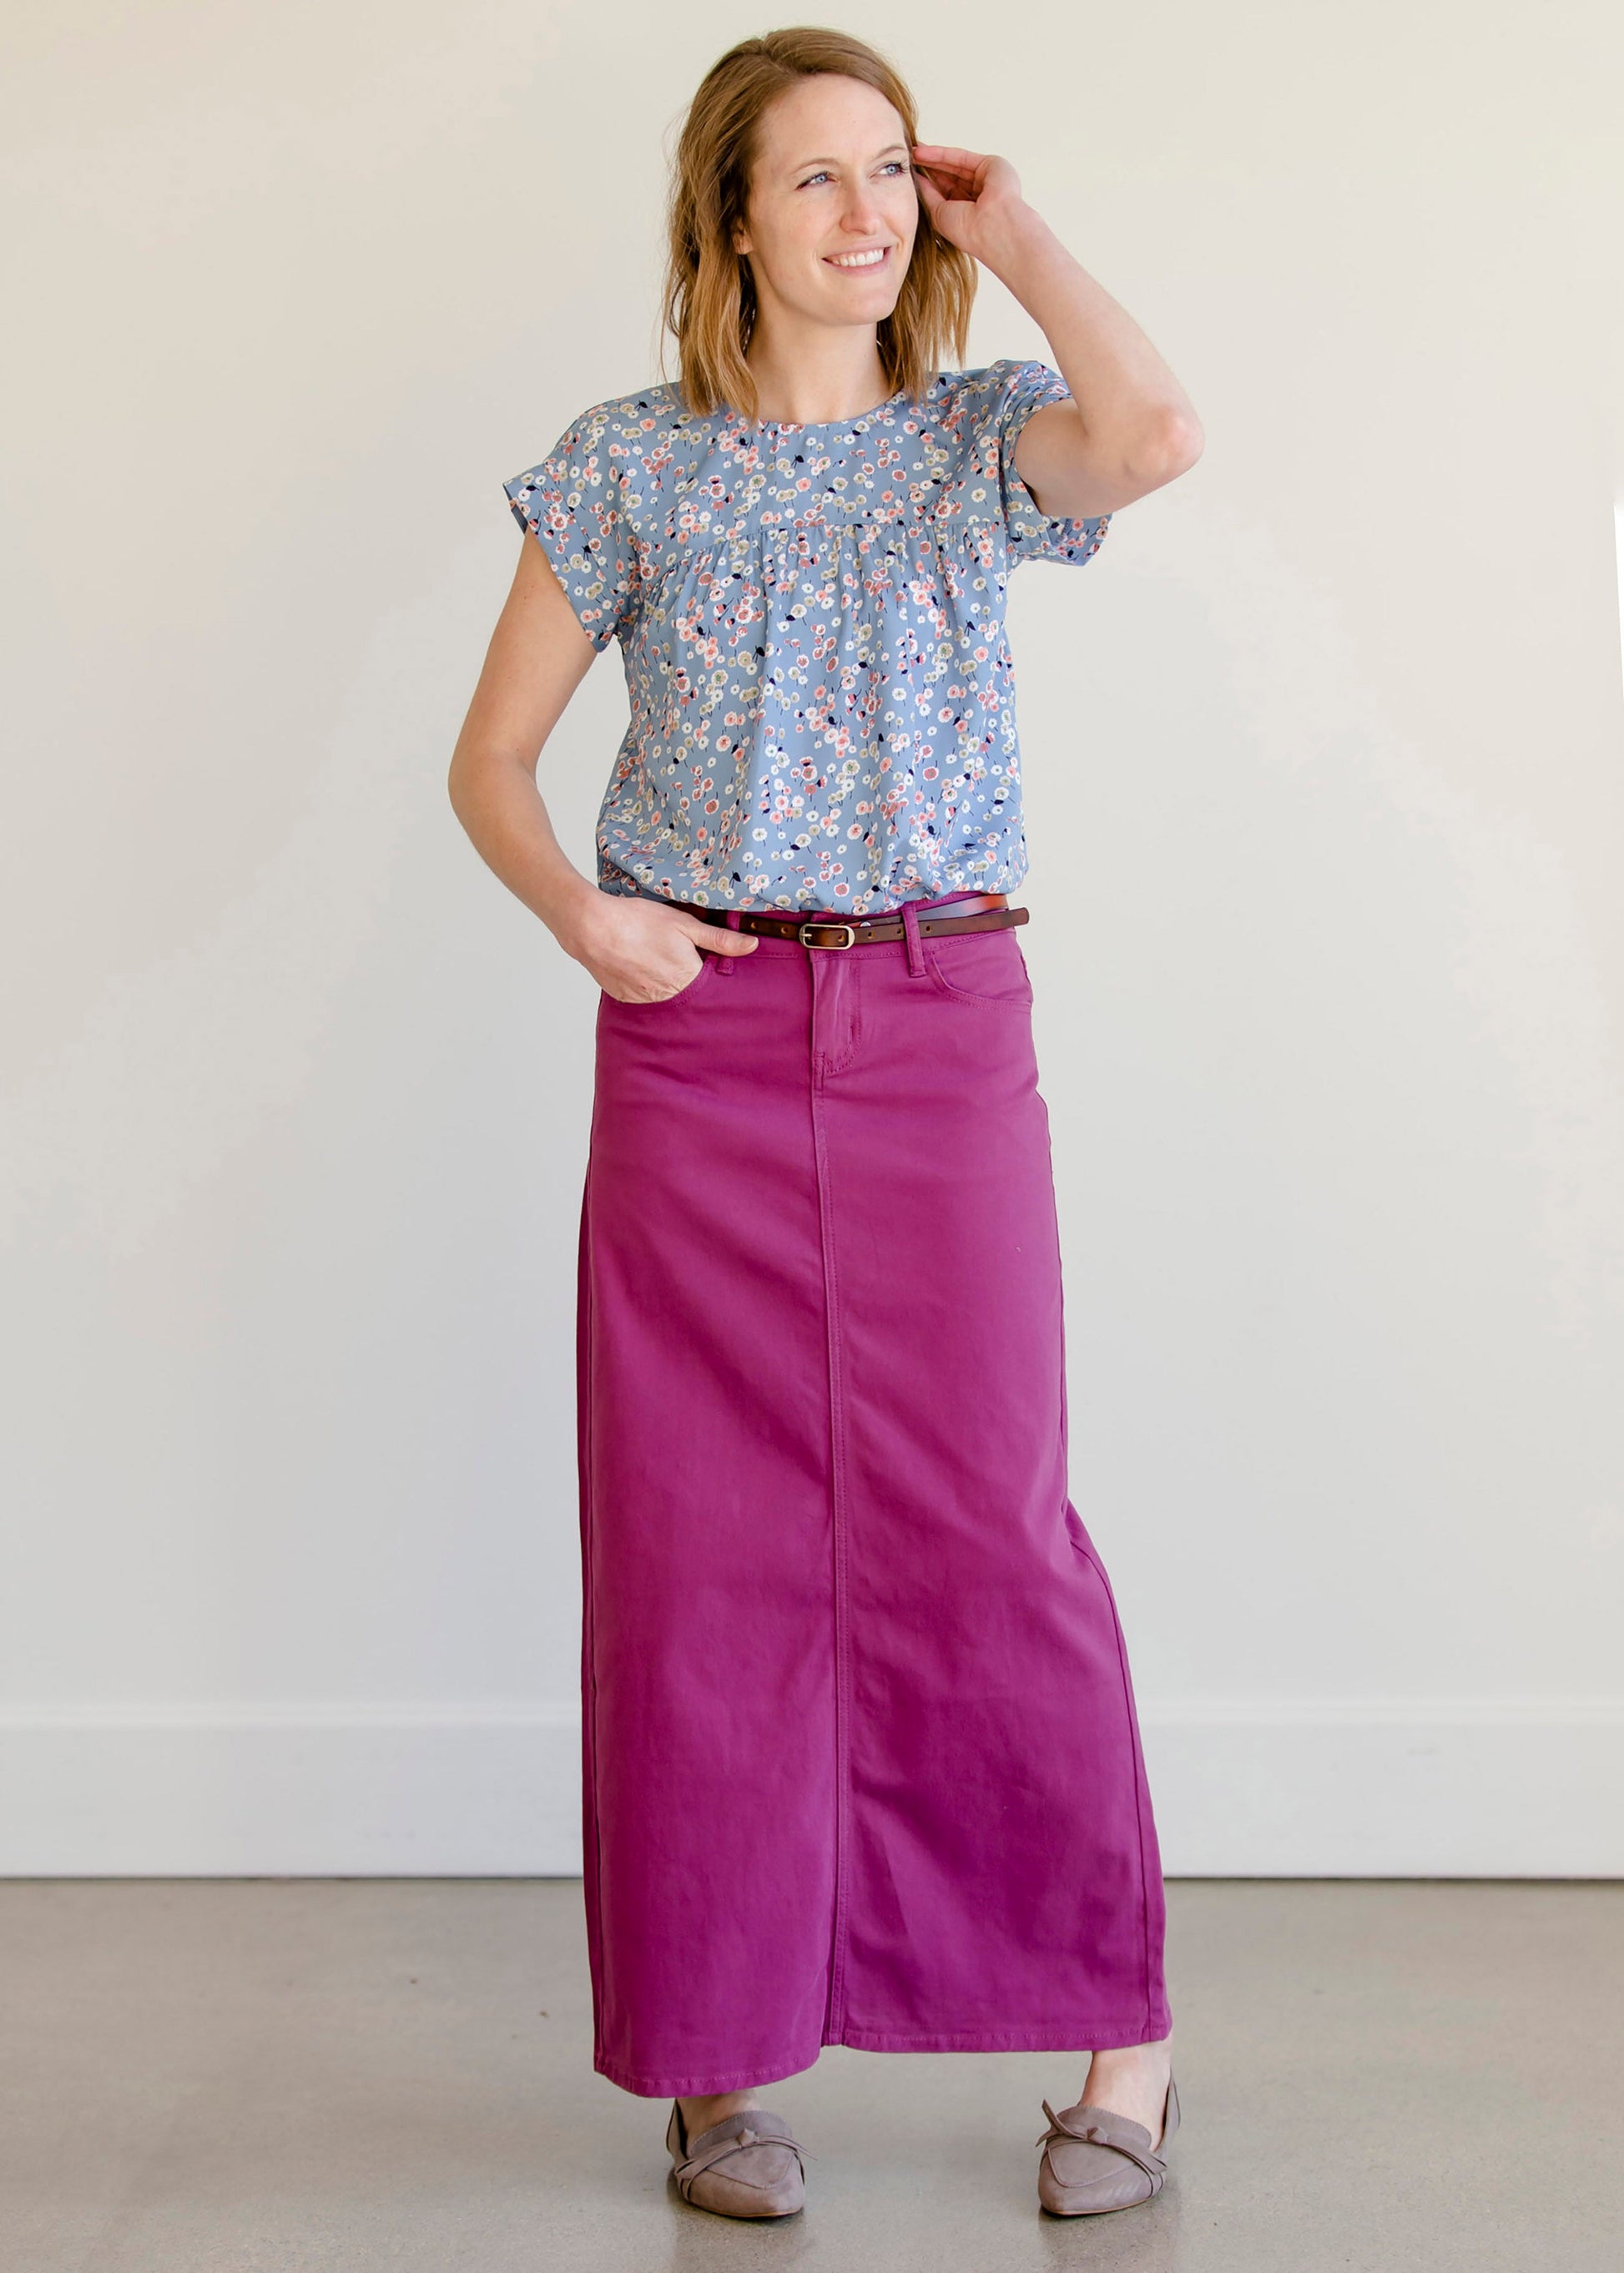 Stella Plum Colored Denim Skirt - FINAL SALE Skirts